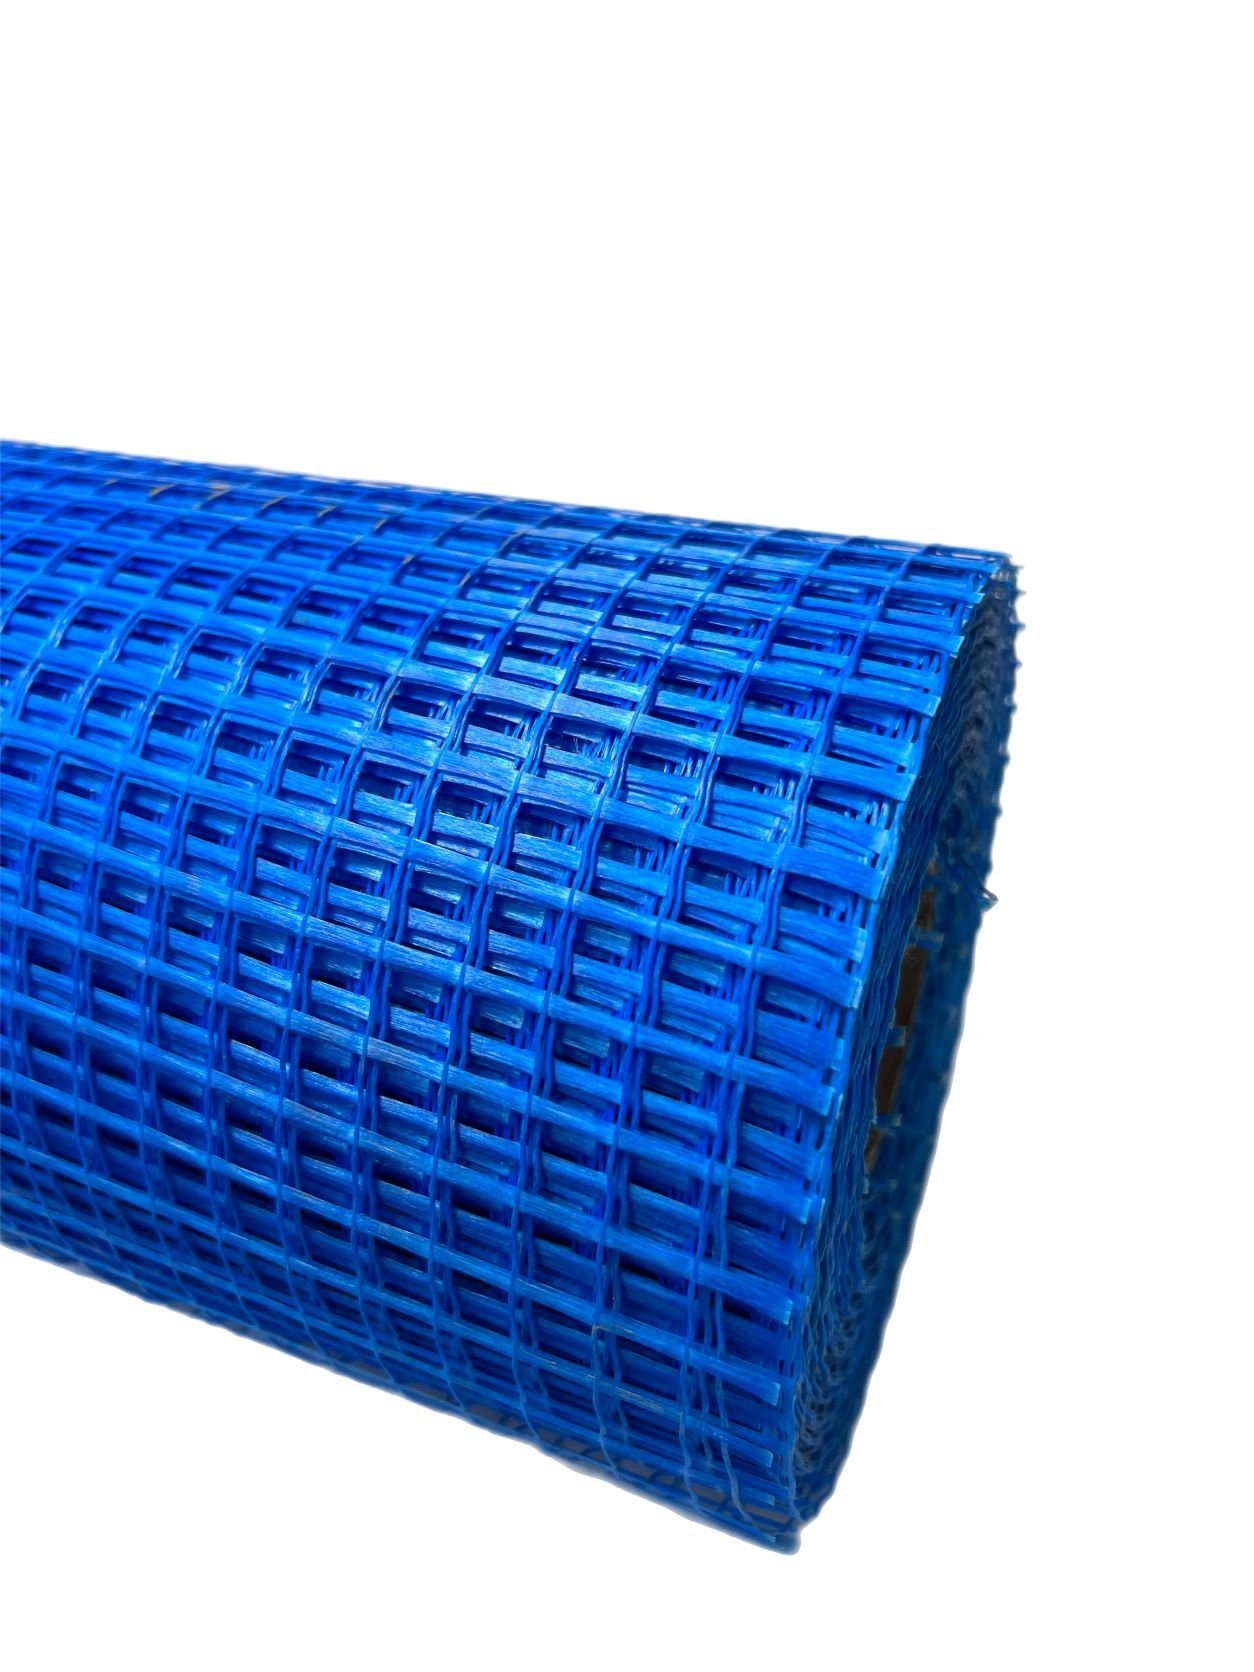 VaGo-Tools Glaswolle Putzgewebe 110g/m² Glasfasergewebe Blau 250m²